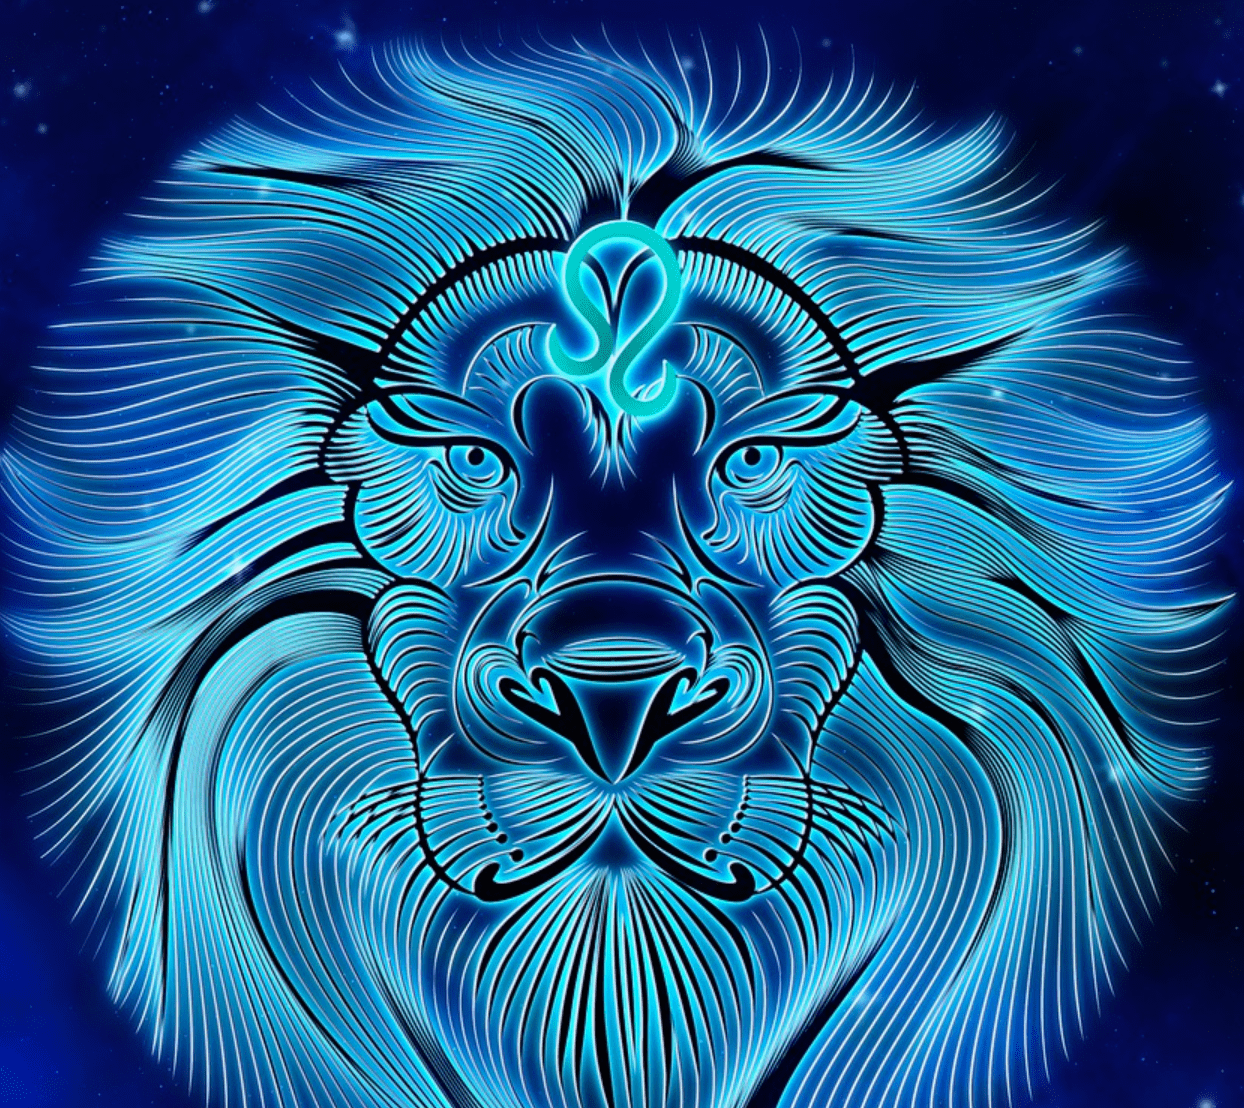 An illustration of the Leo zodiac sign | Photo: Pixabay/Darkmoon_Art 